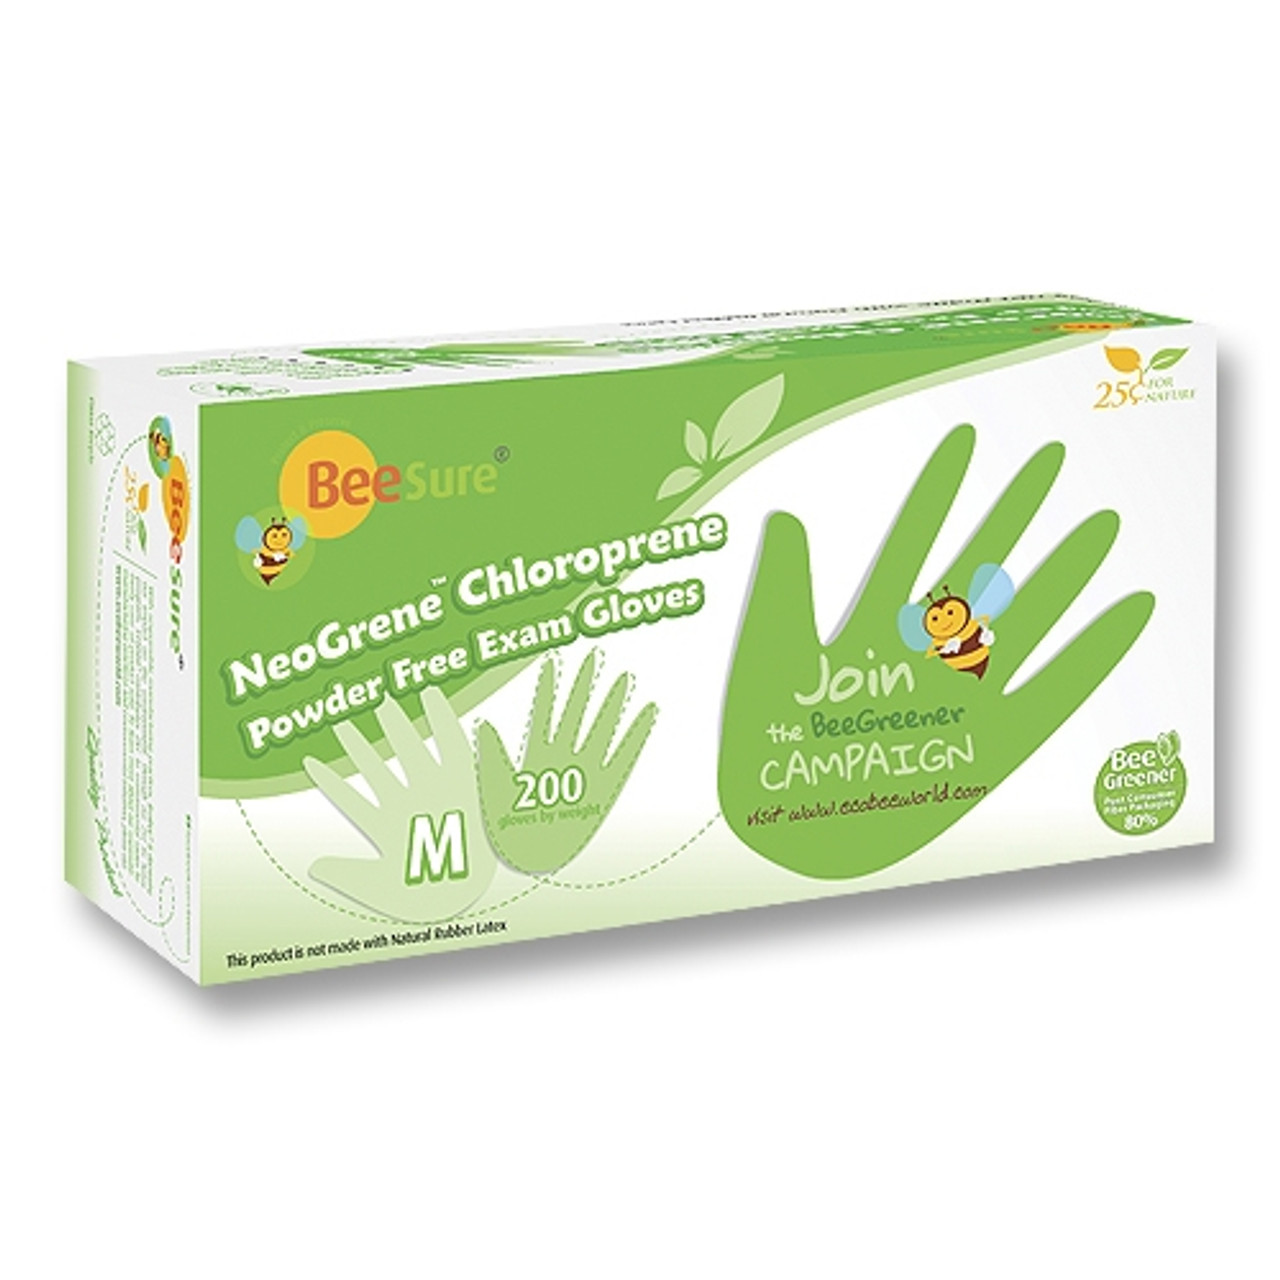 BeeSure NeoGrene Chloroprene Powder Free Exam Gloves - Medium, Pro2 Solutions, BE1187